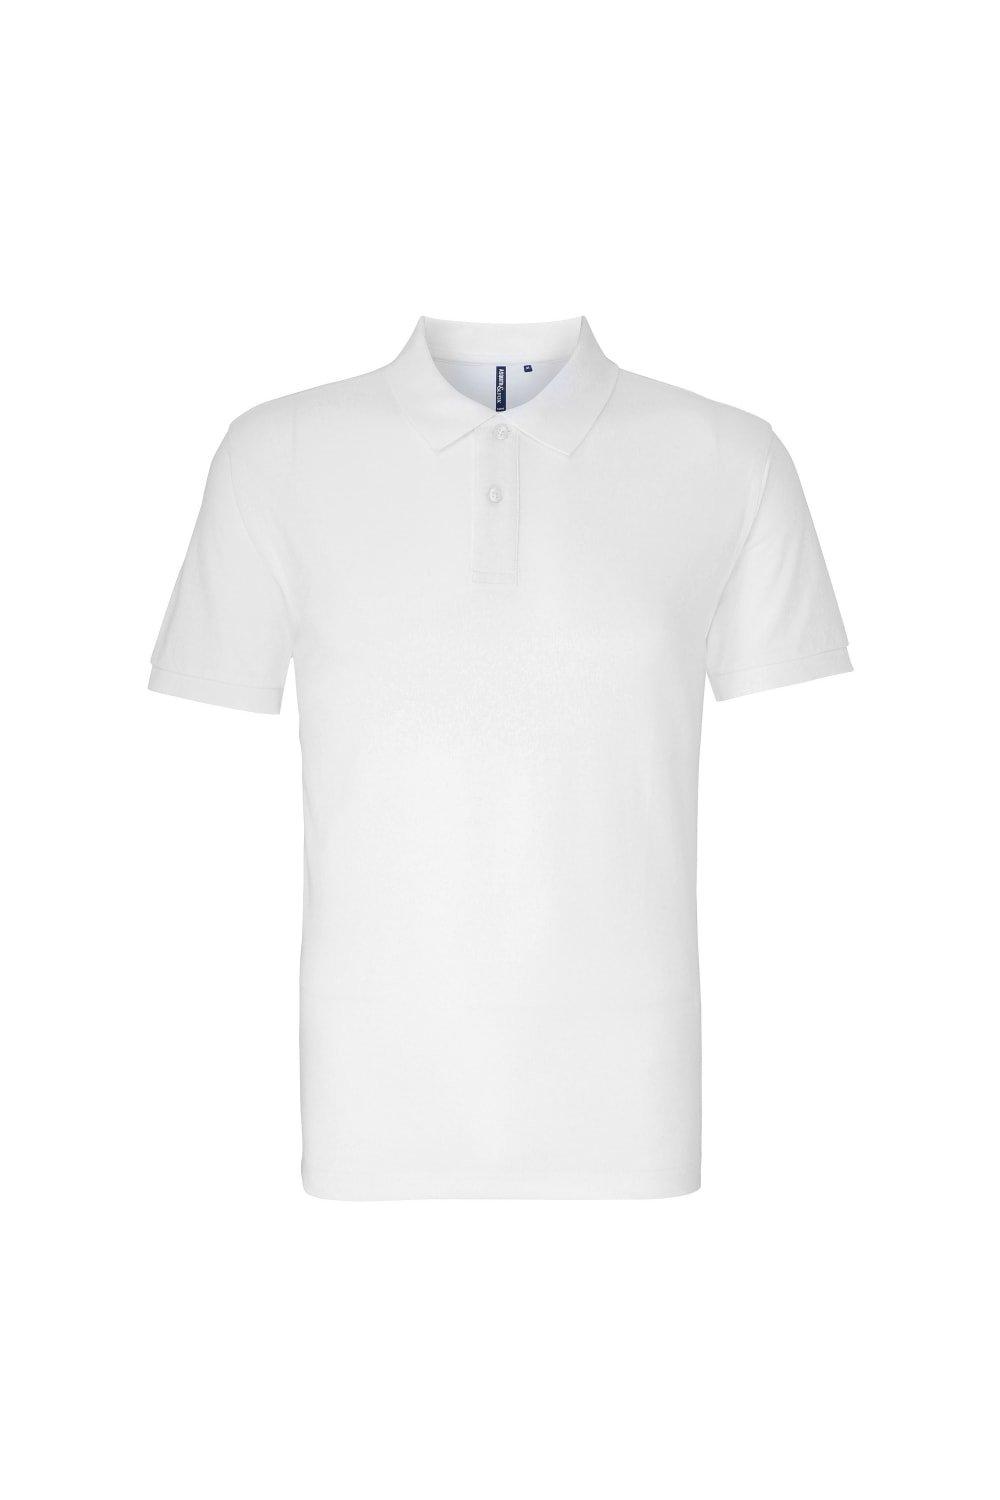 цена Простая рубашка-поло с короткими рукавами Asquith & Fox, белый